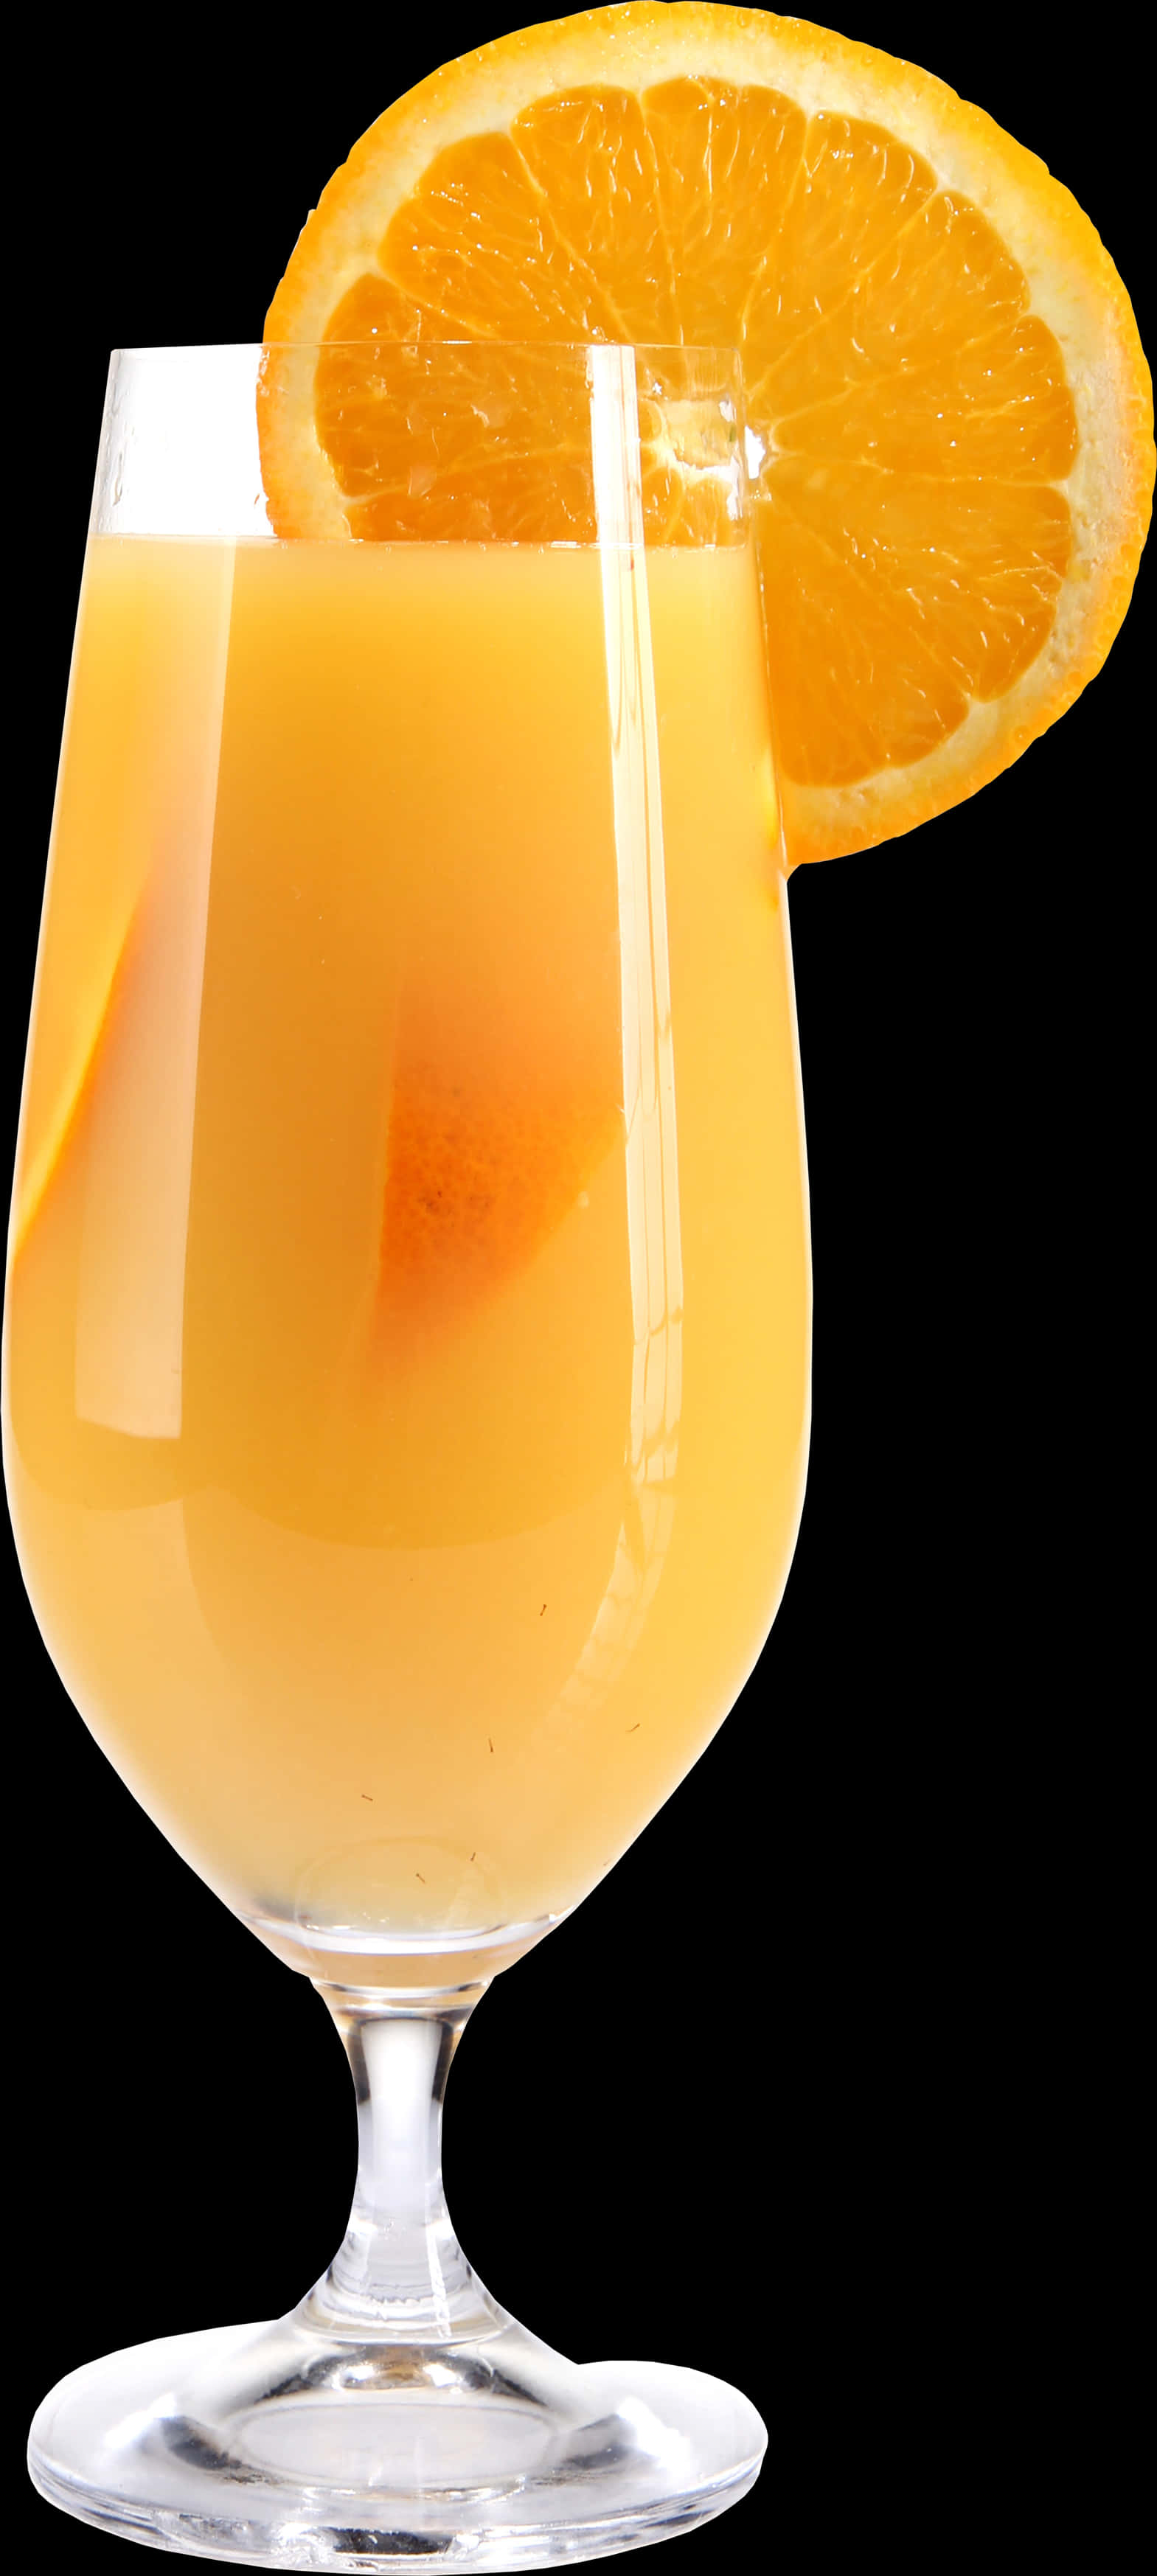 Orange Juice In Wine Glass